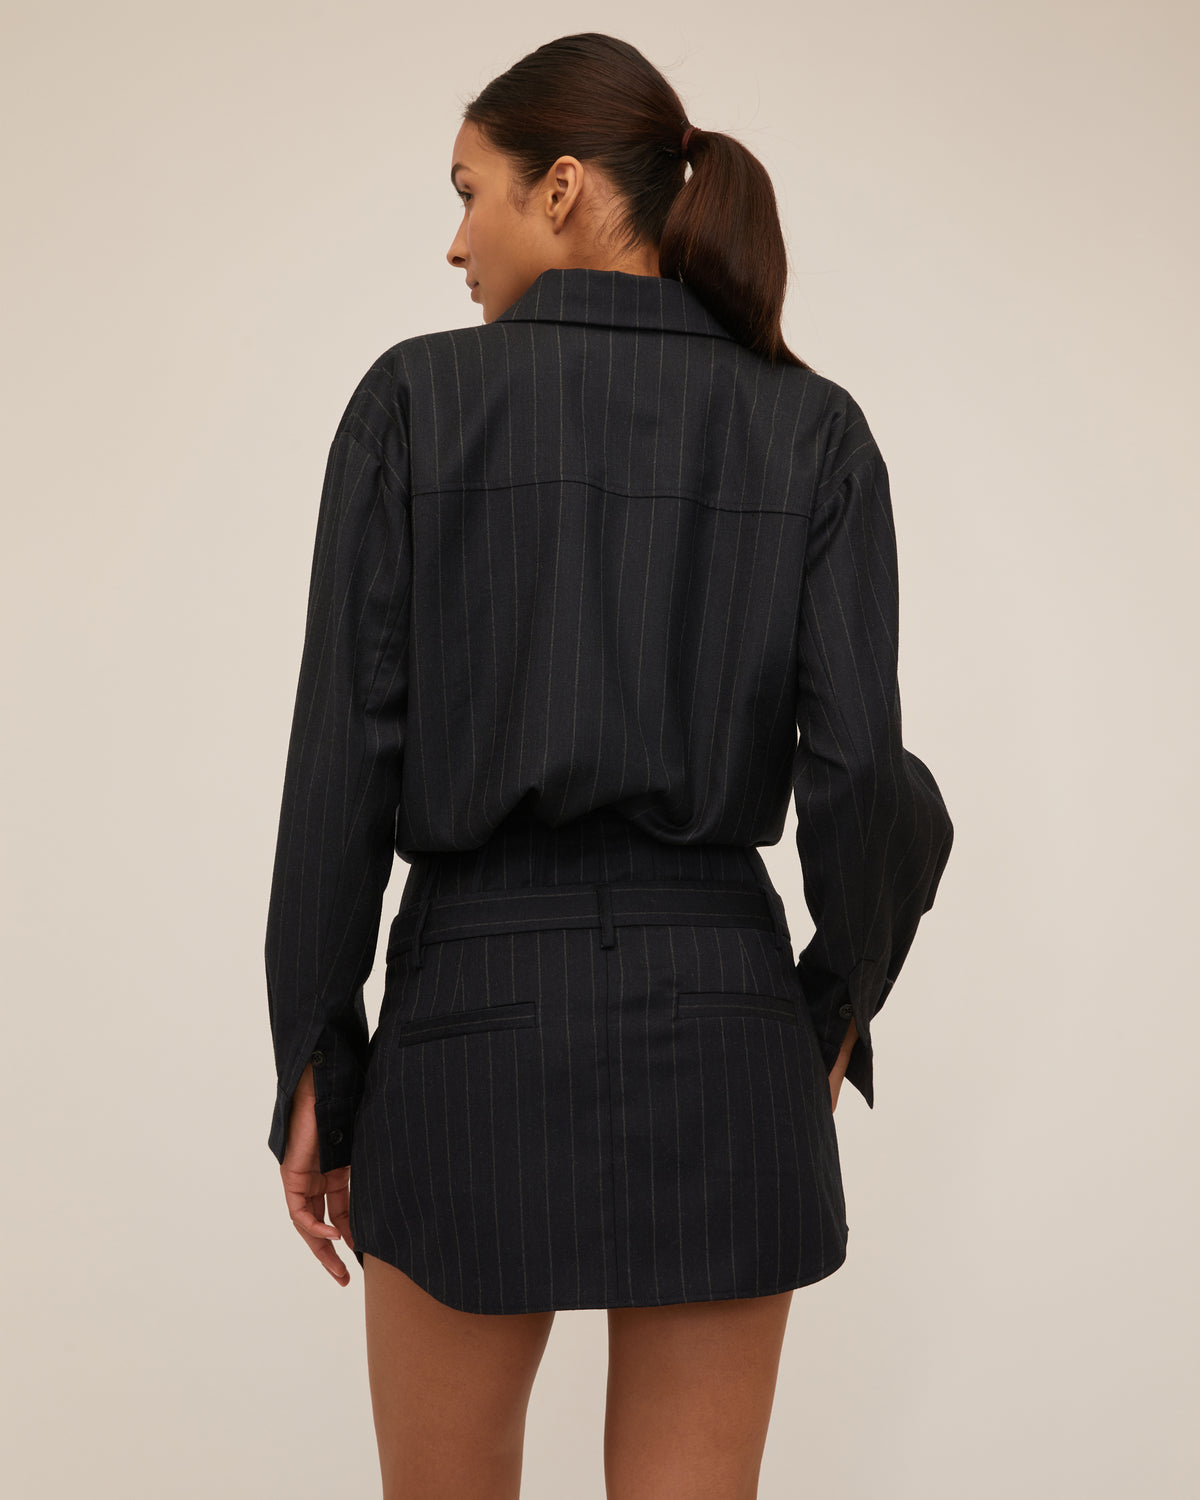 Kyla Pinstripe Corset Suit Skirt